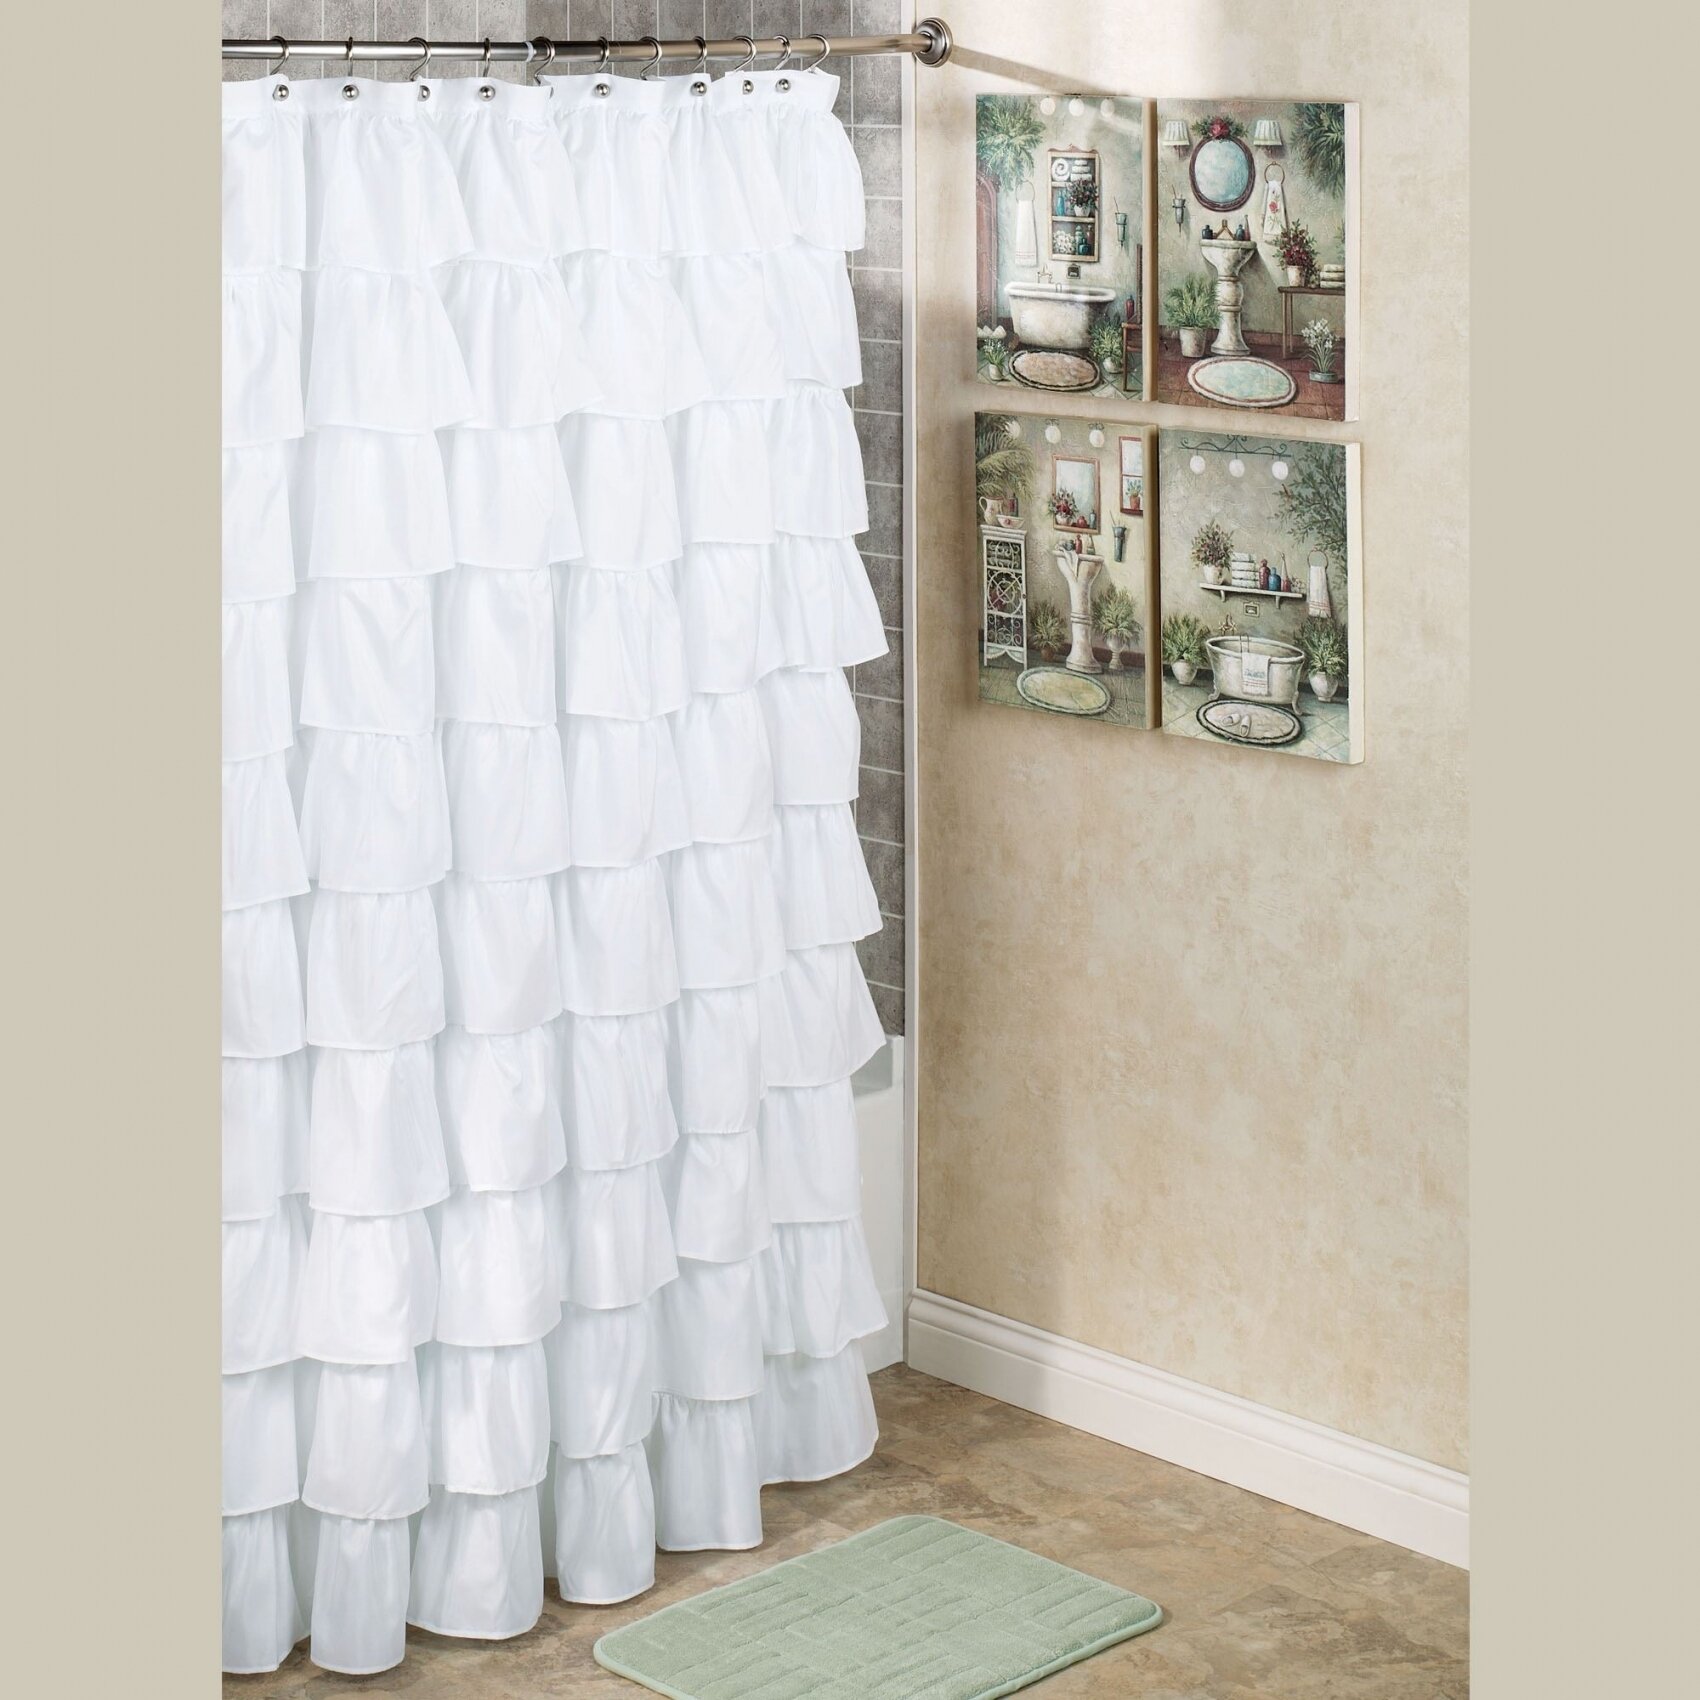 Ikea Shower Curtain for Best Your Bathroom Decoration: 84in Shower Curtain | Turquoise Shower Curtains | Ikea Shower Curtain